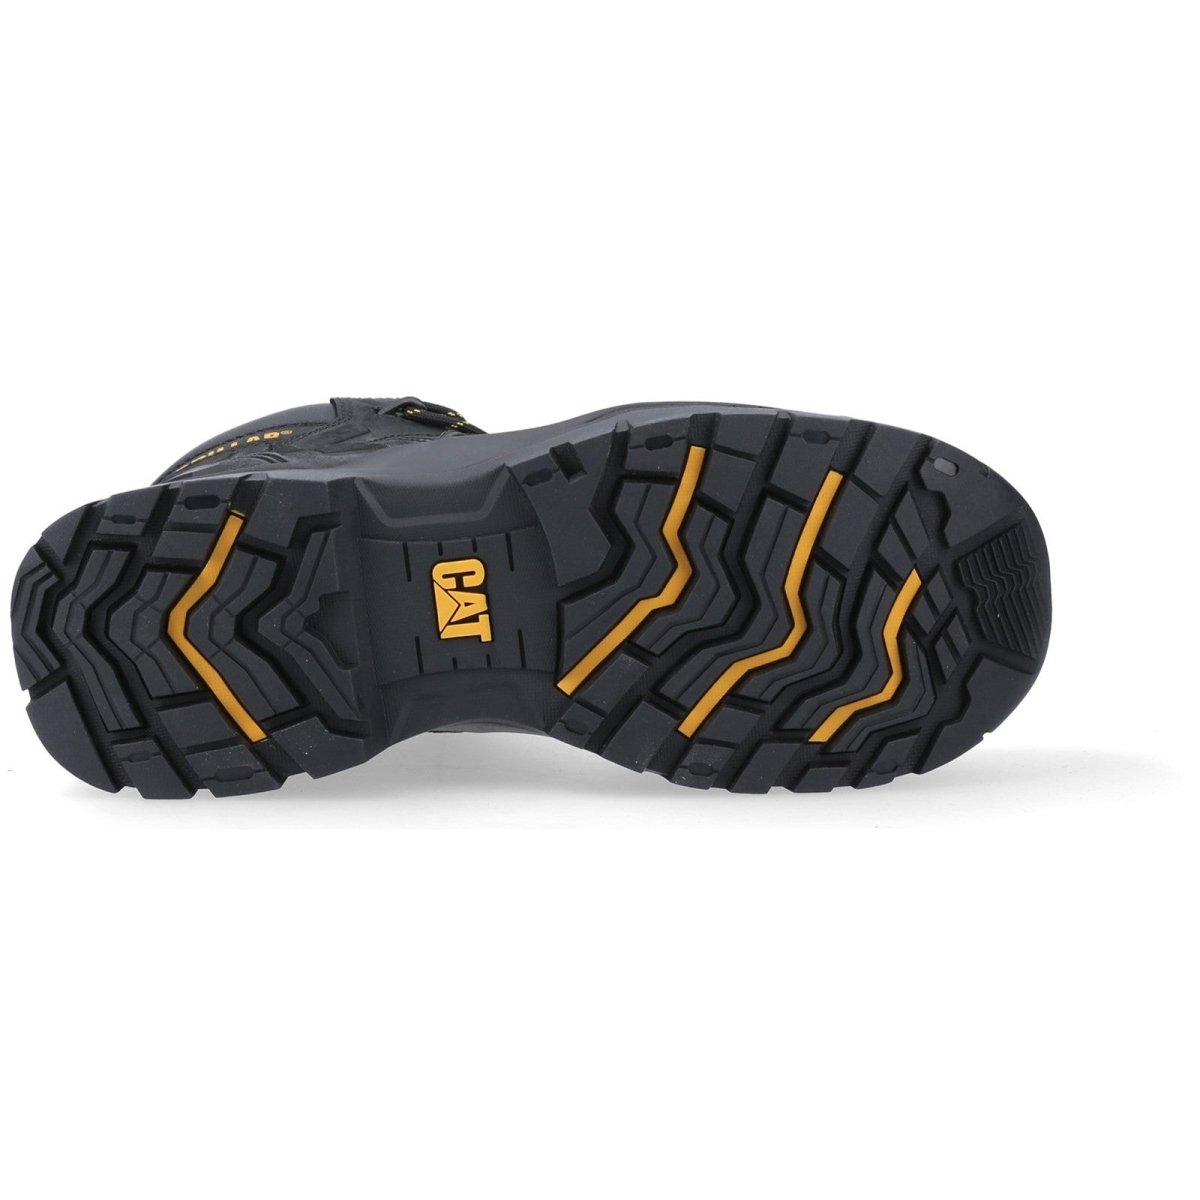 Caterpillar Everett S3 Waterproof Composite Toe Safety Boots - Shoe Store Direct